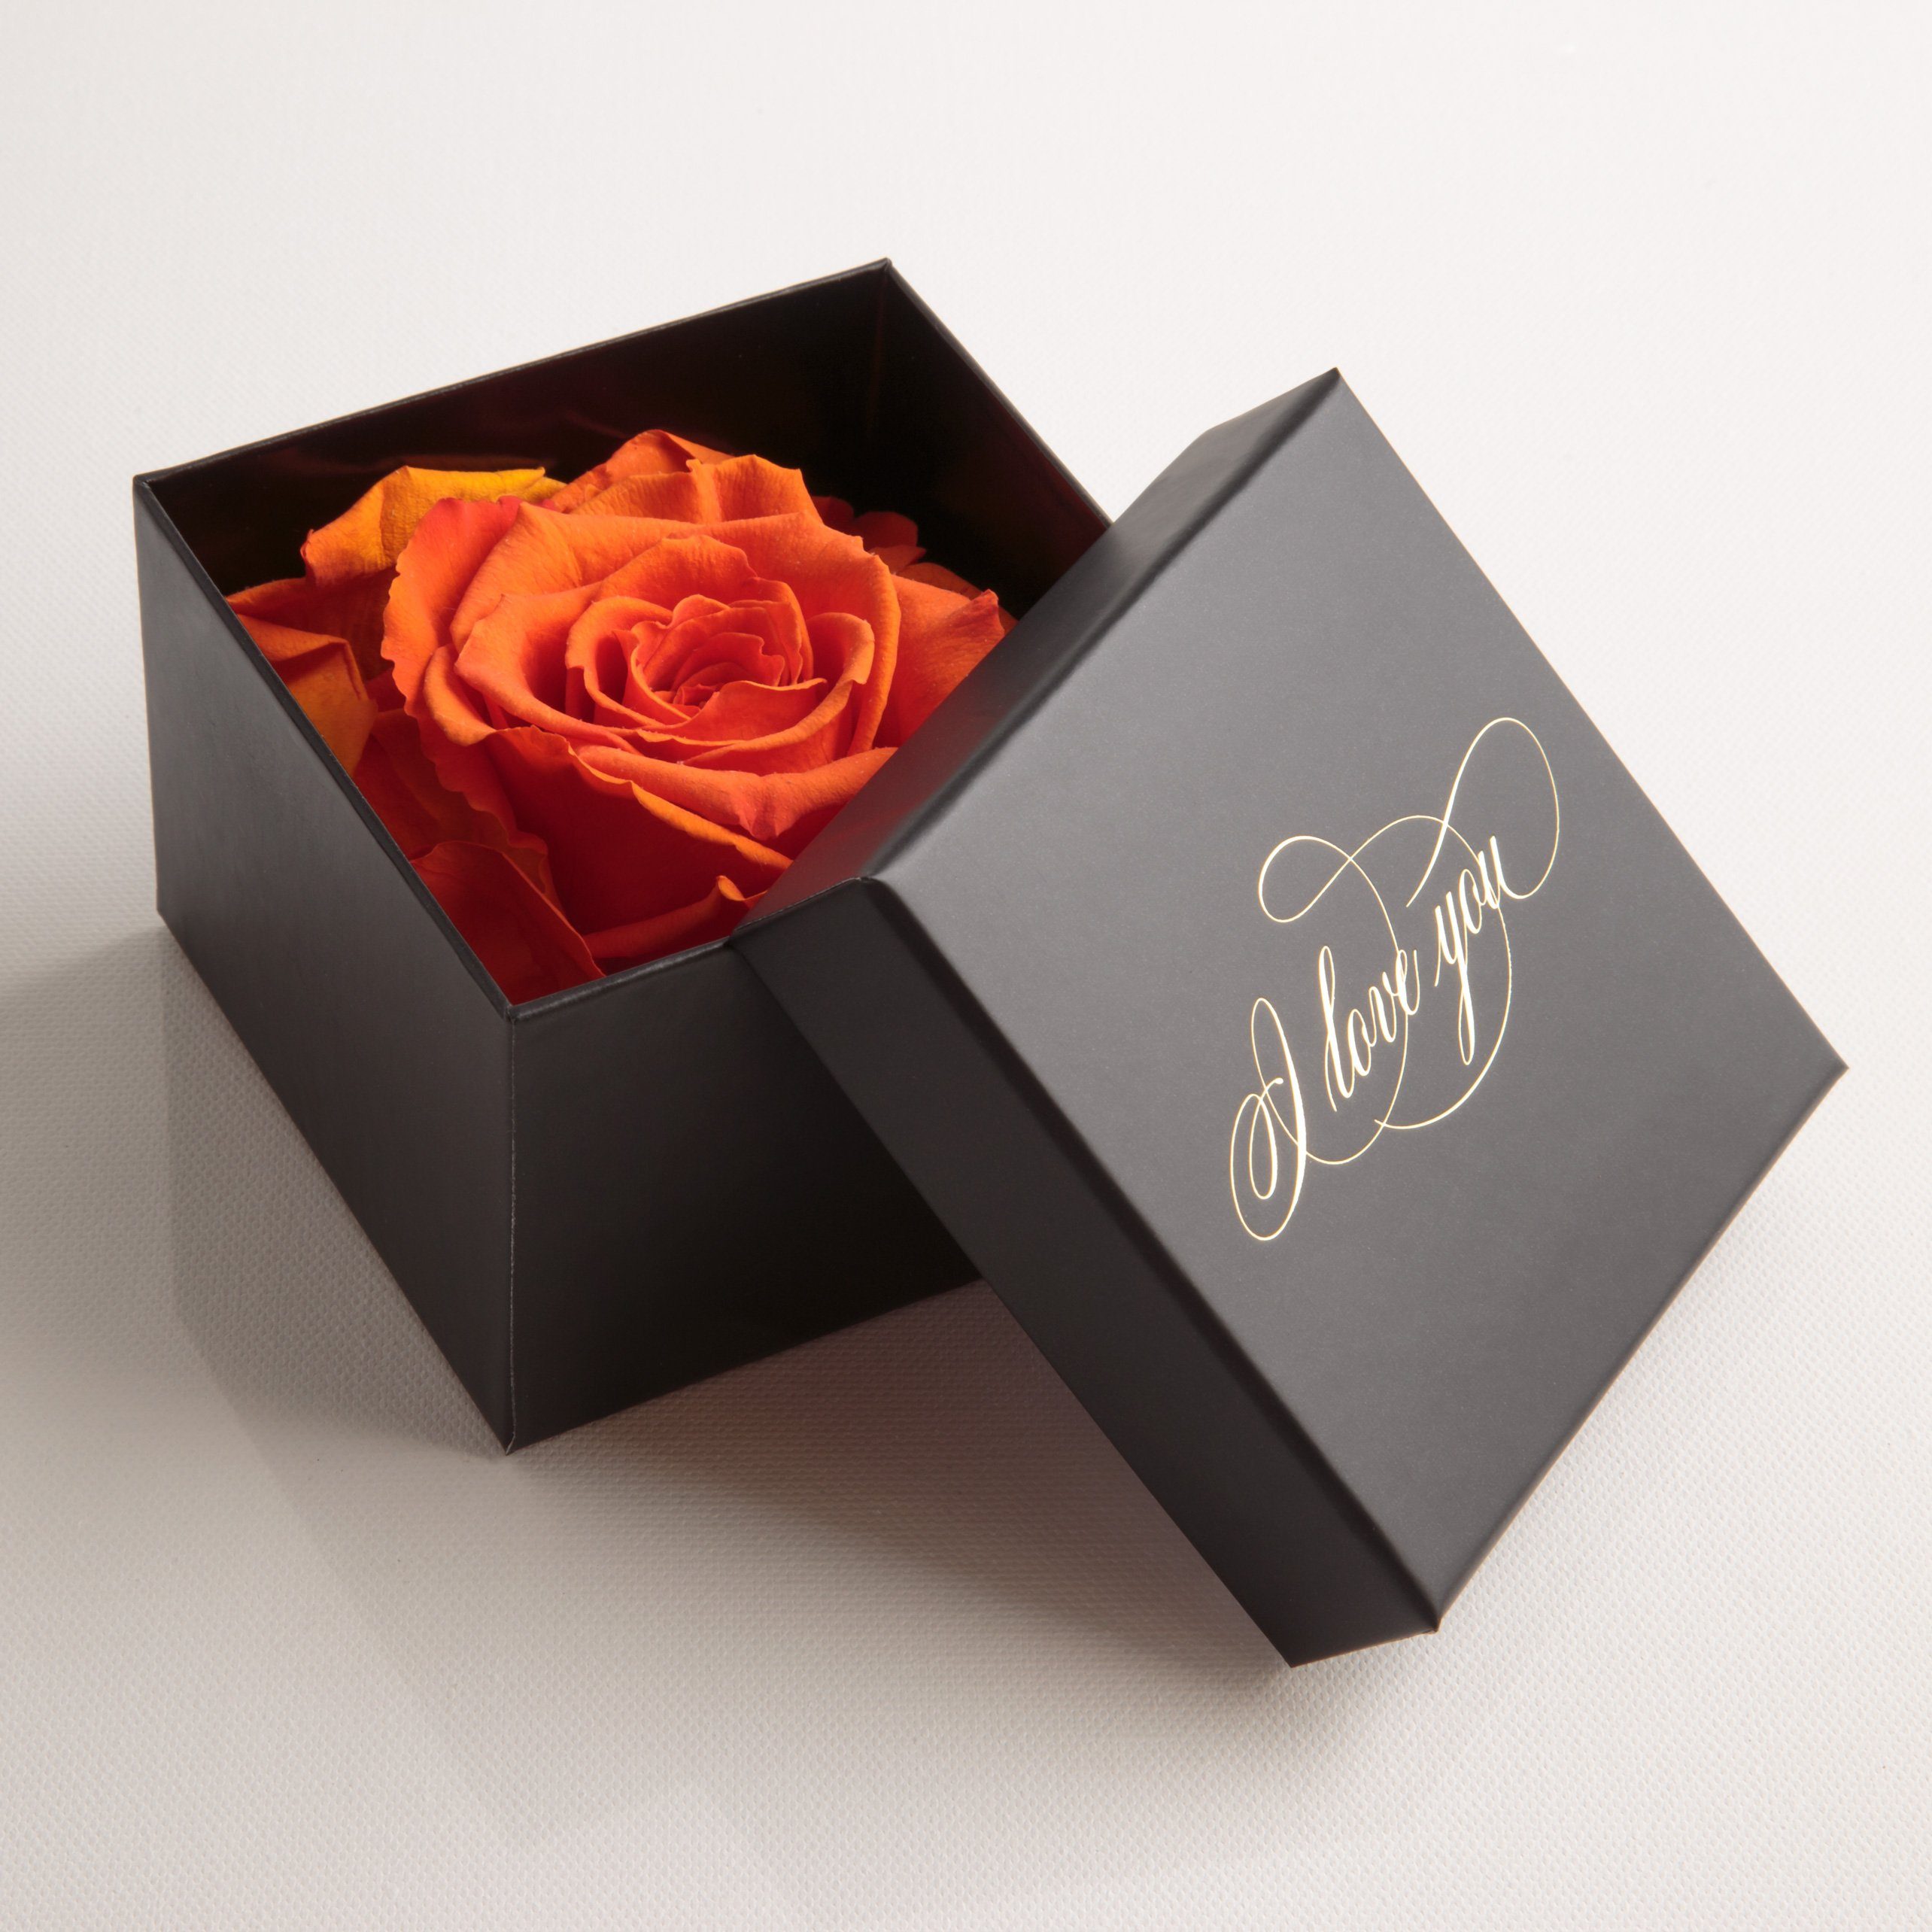 Kunstblume Infinity Rose Box I Love You Geschenk Idee Liebesbeweis Rose, ROSEMARIE SCHULZ Heidelberg, Höhe 6 cm, Echte Rose konserviert Orange